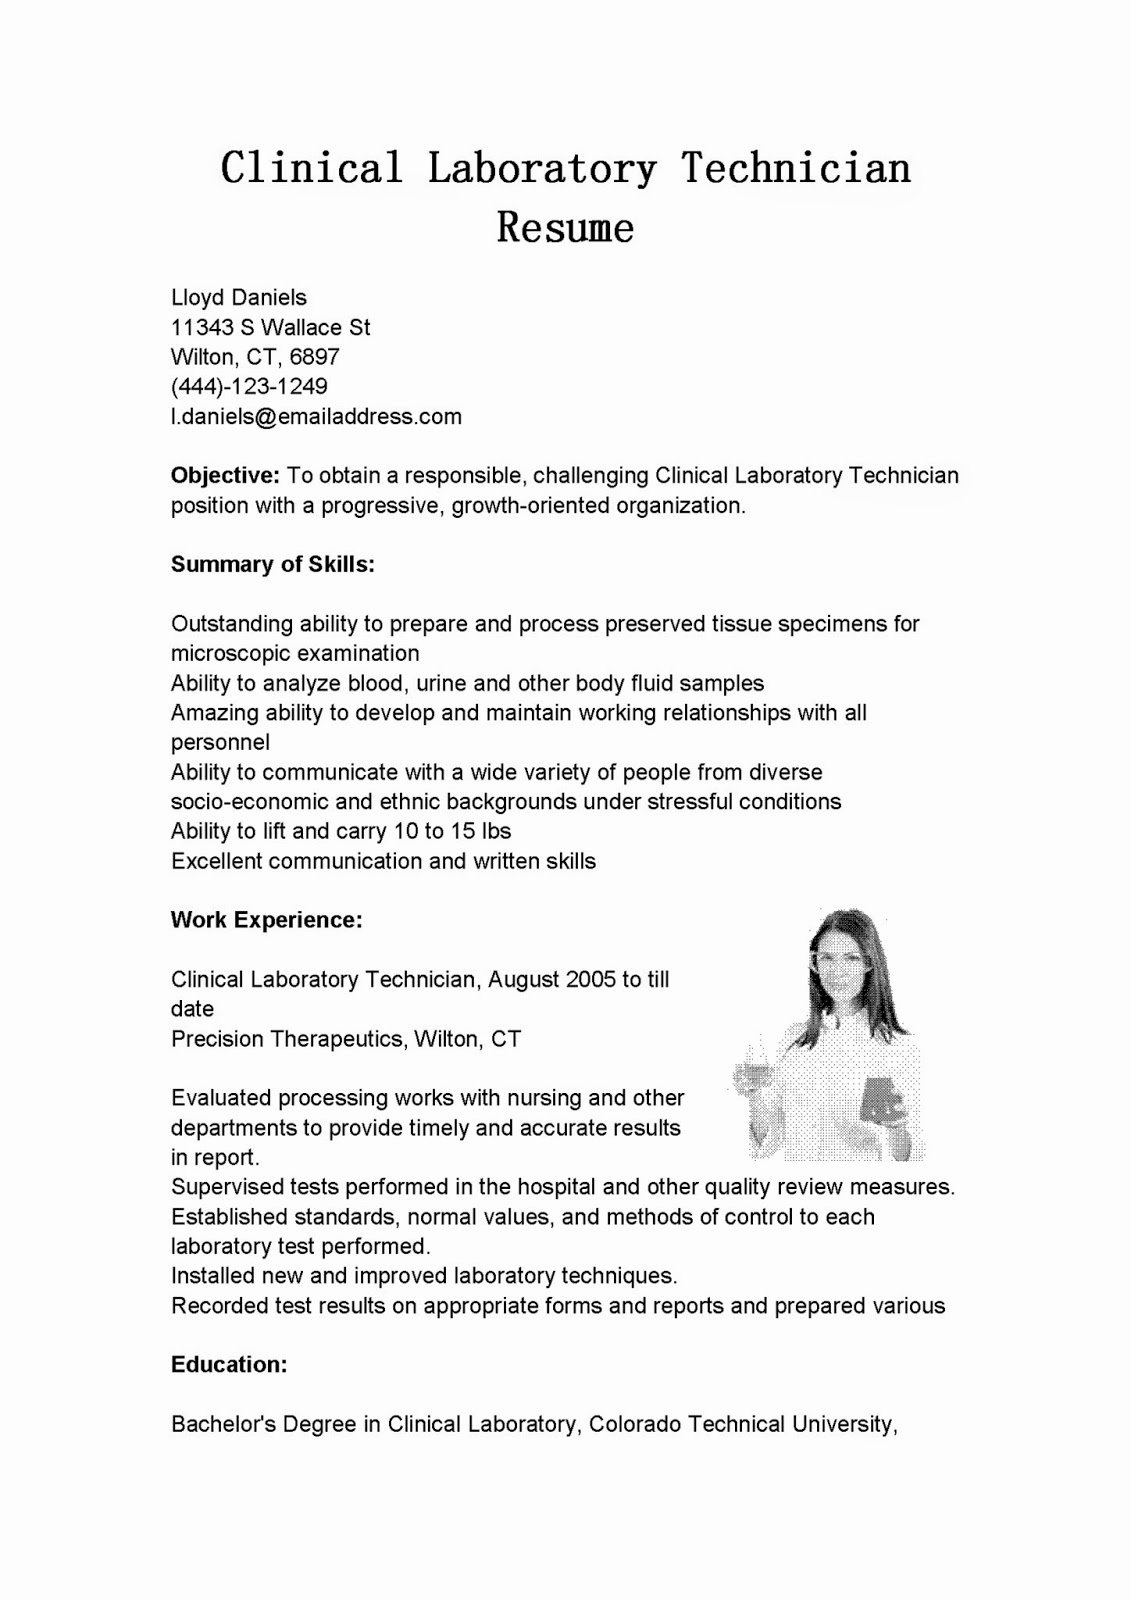 Resume for Laboratory Technician Lovely Resume Samples Clinical Laboratory Technician Resume Sample